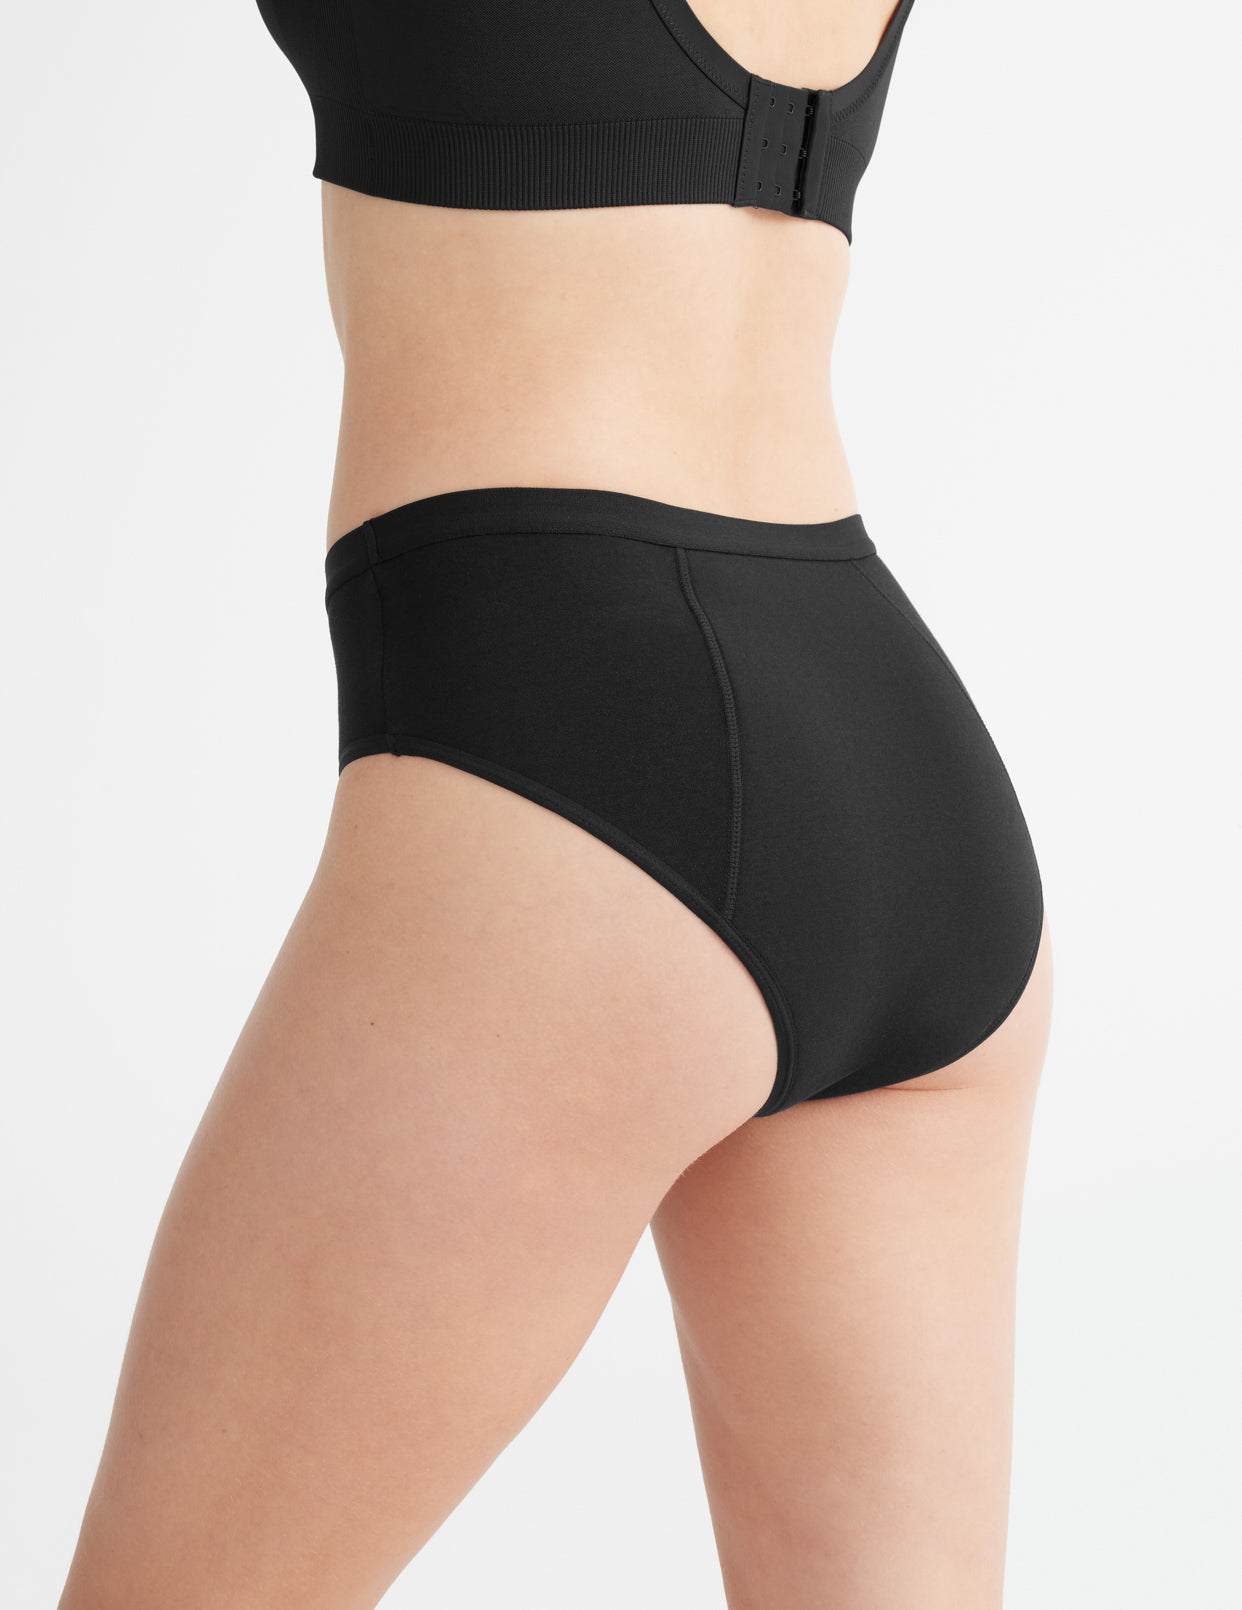  KNIX Super Leakproof Bikini - Period Underwear For